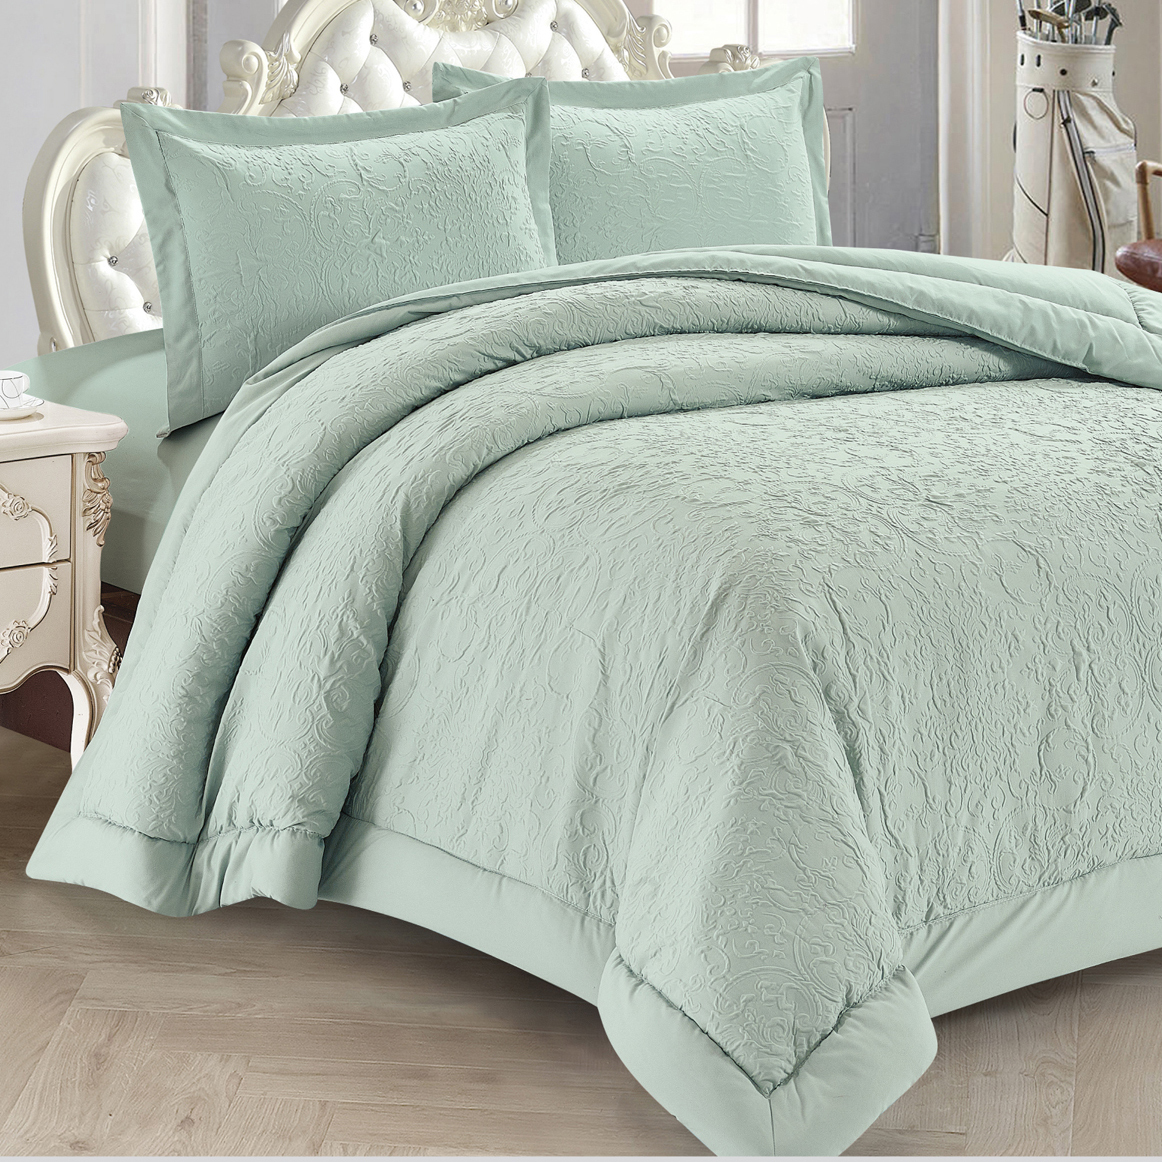 Casarosso Lilian Mint Green Comforter, Mint Green Queen Bedspread